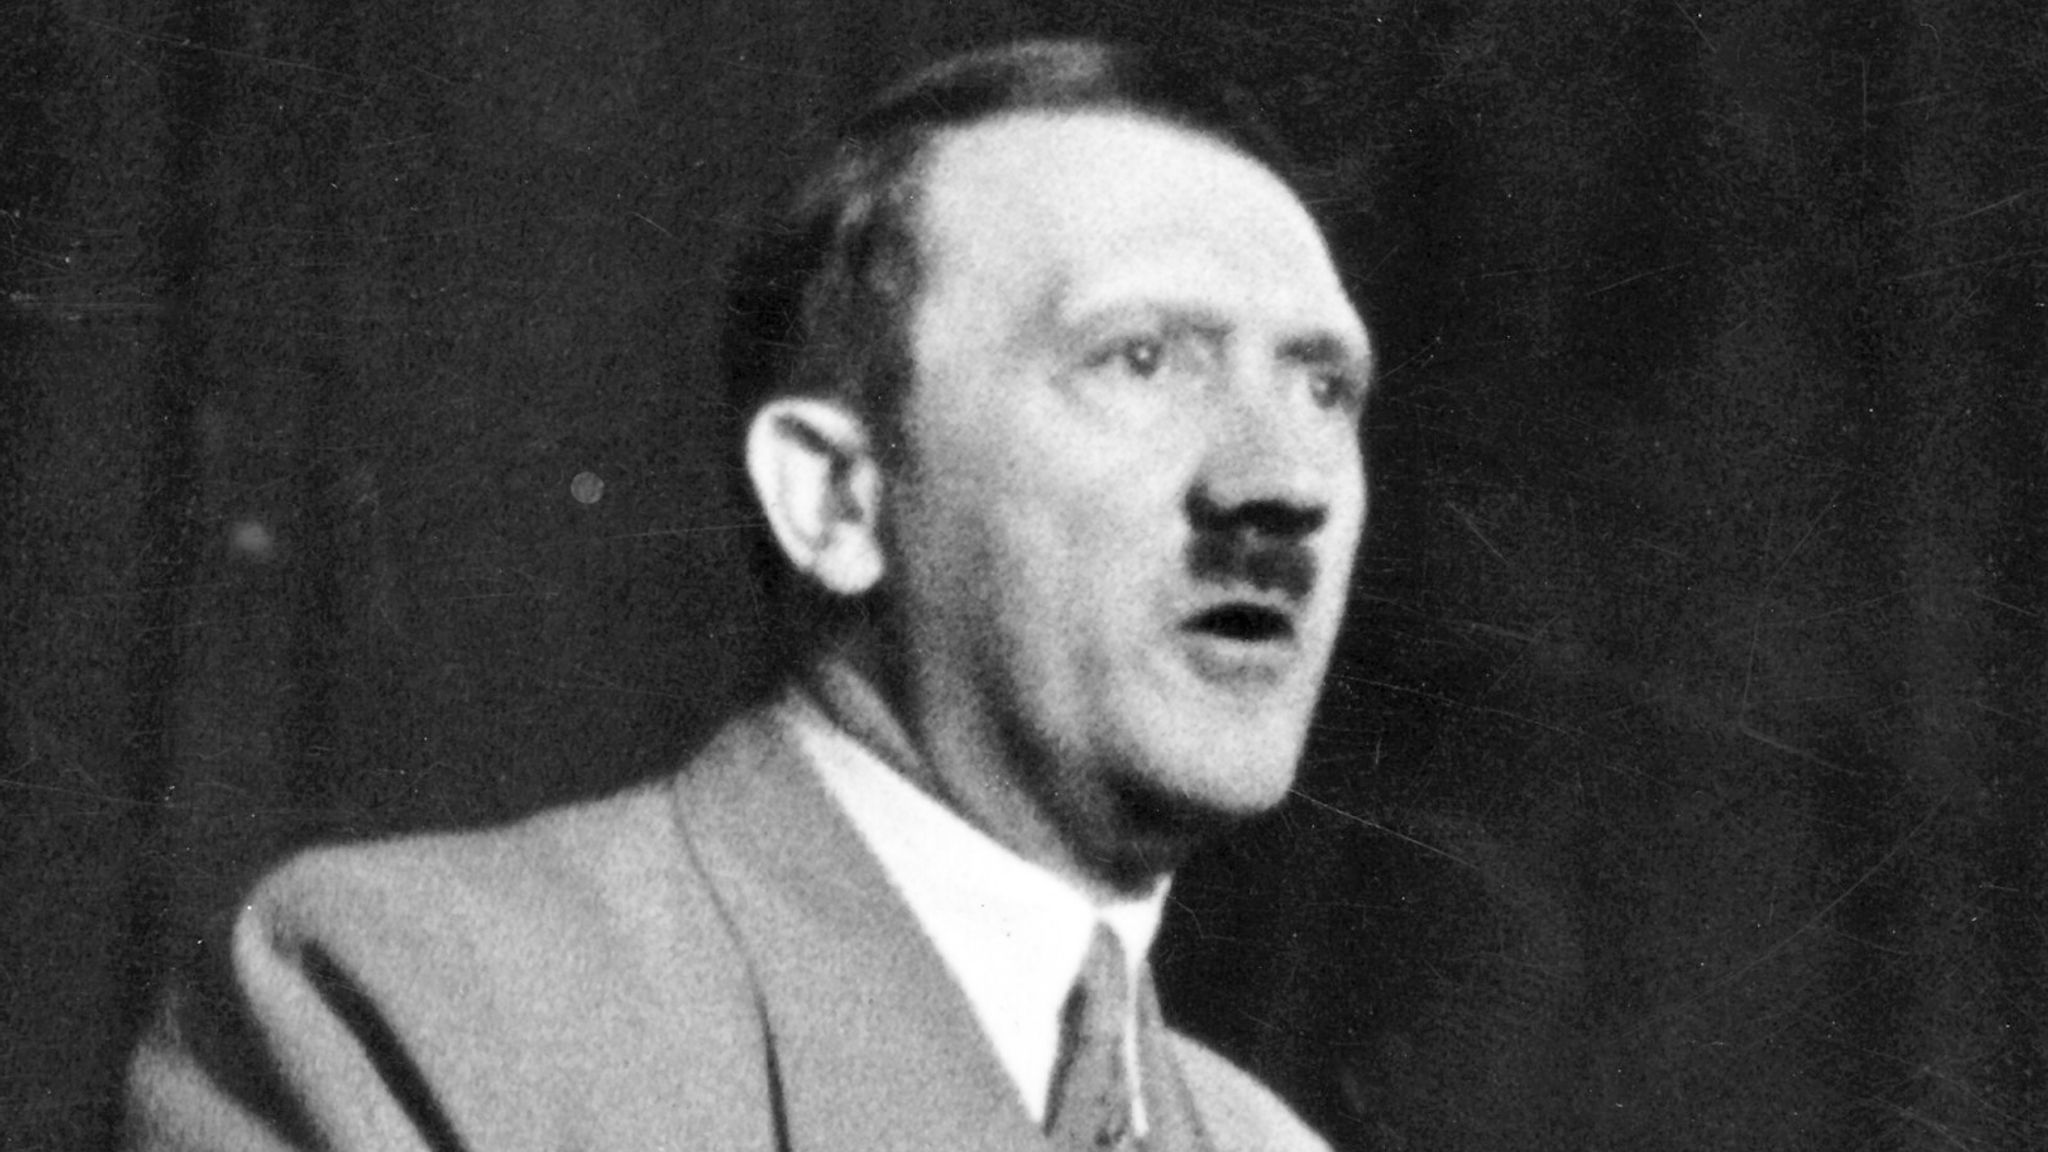 Adolf Hitler 'had Jewish origins', claims Russian minister Sergei Lavrov in  rant | World News | Sky News